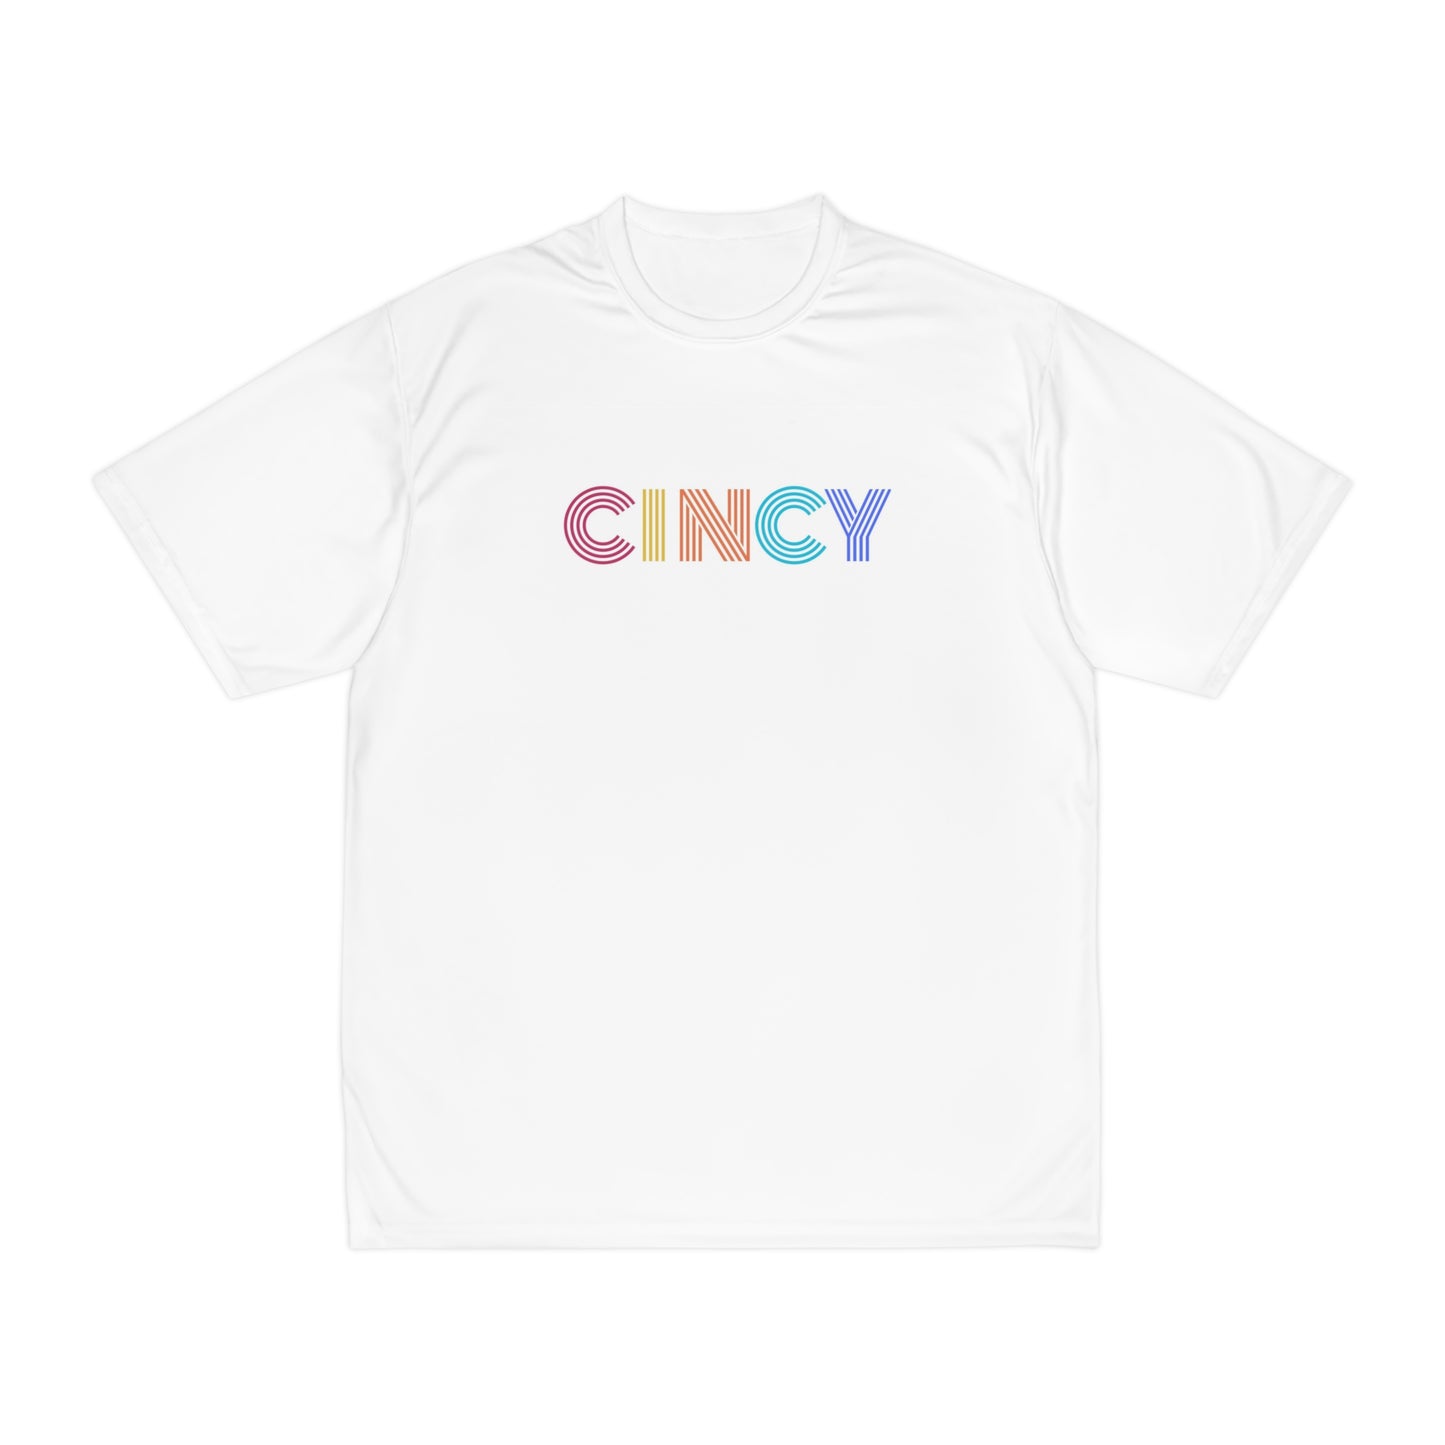 CINCY - Men's Performance T-Shirt